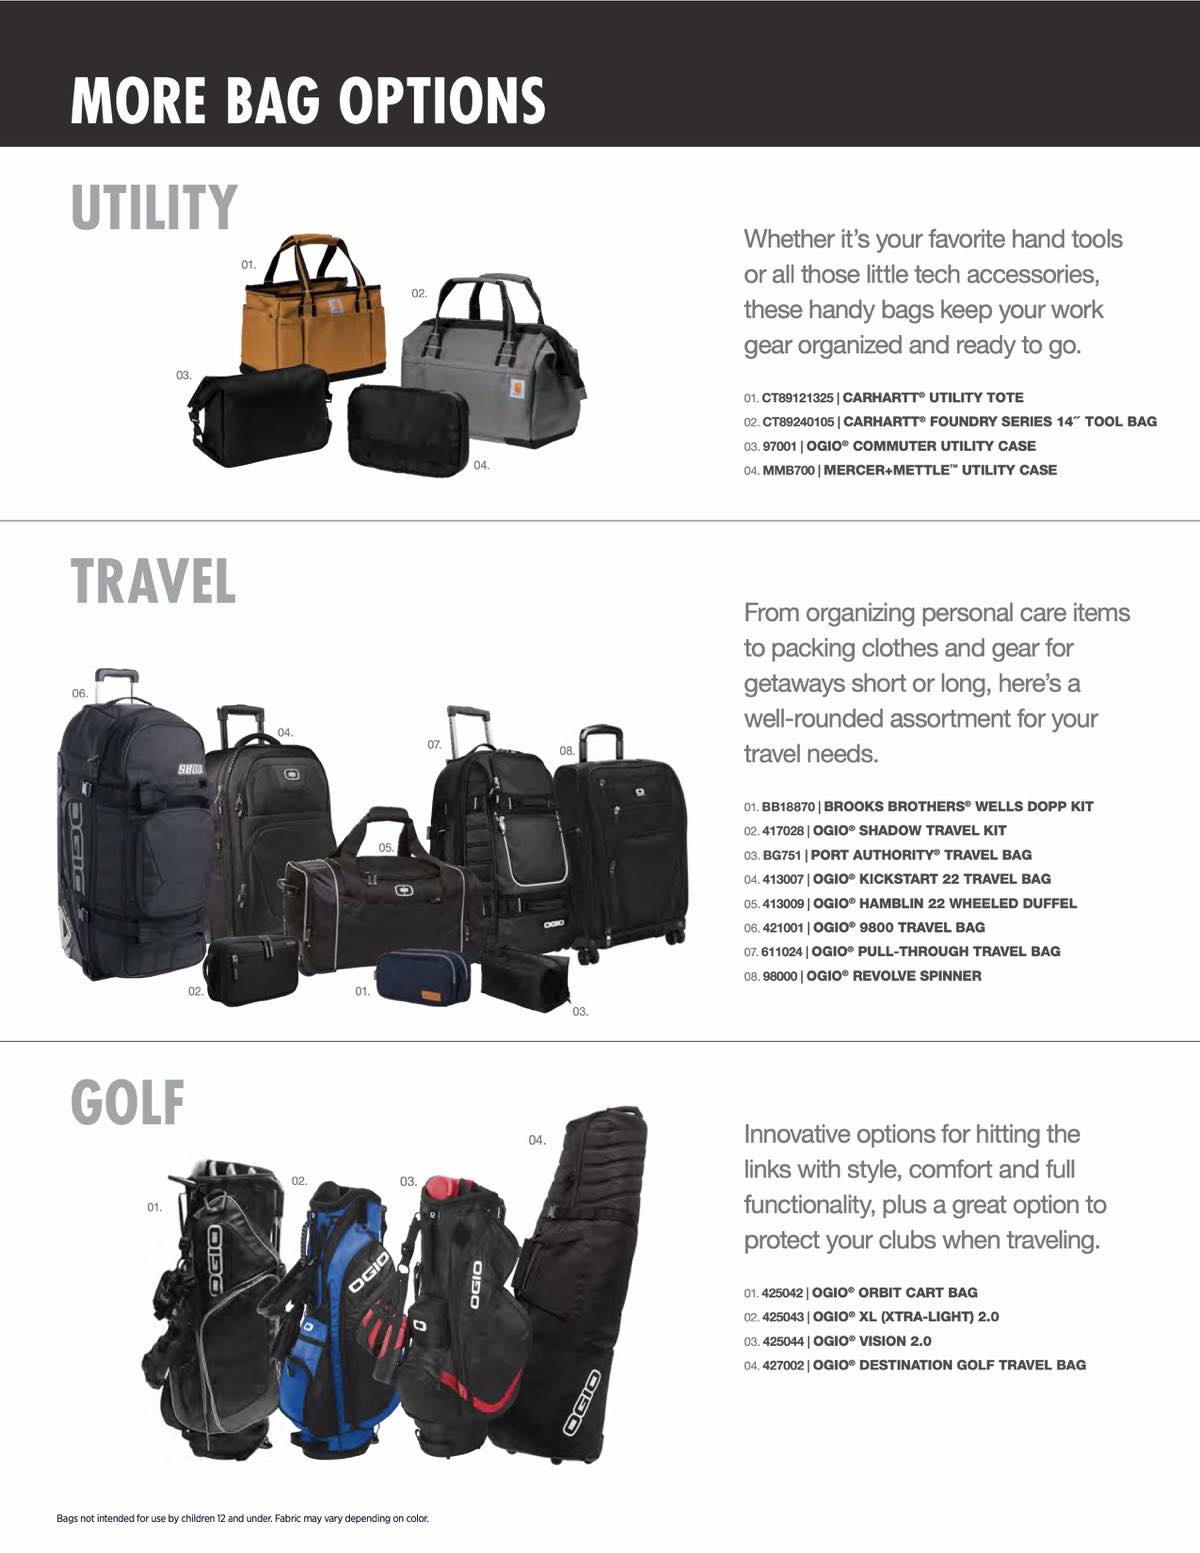 bags navigator, more bag options, utility, travel, and golf